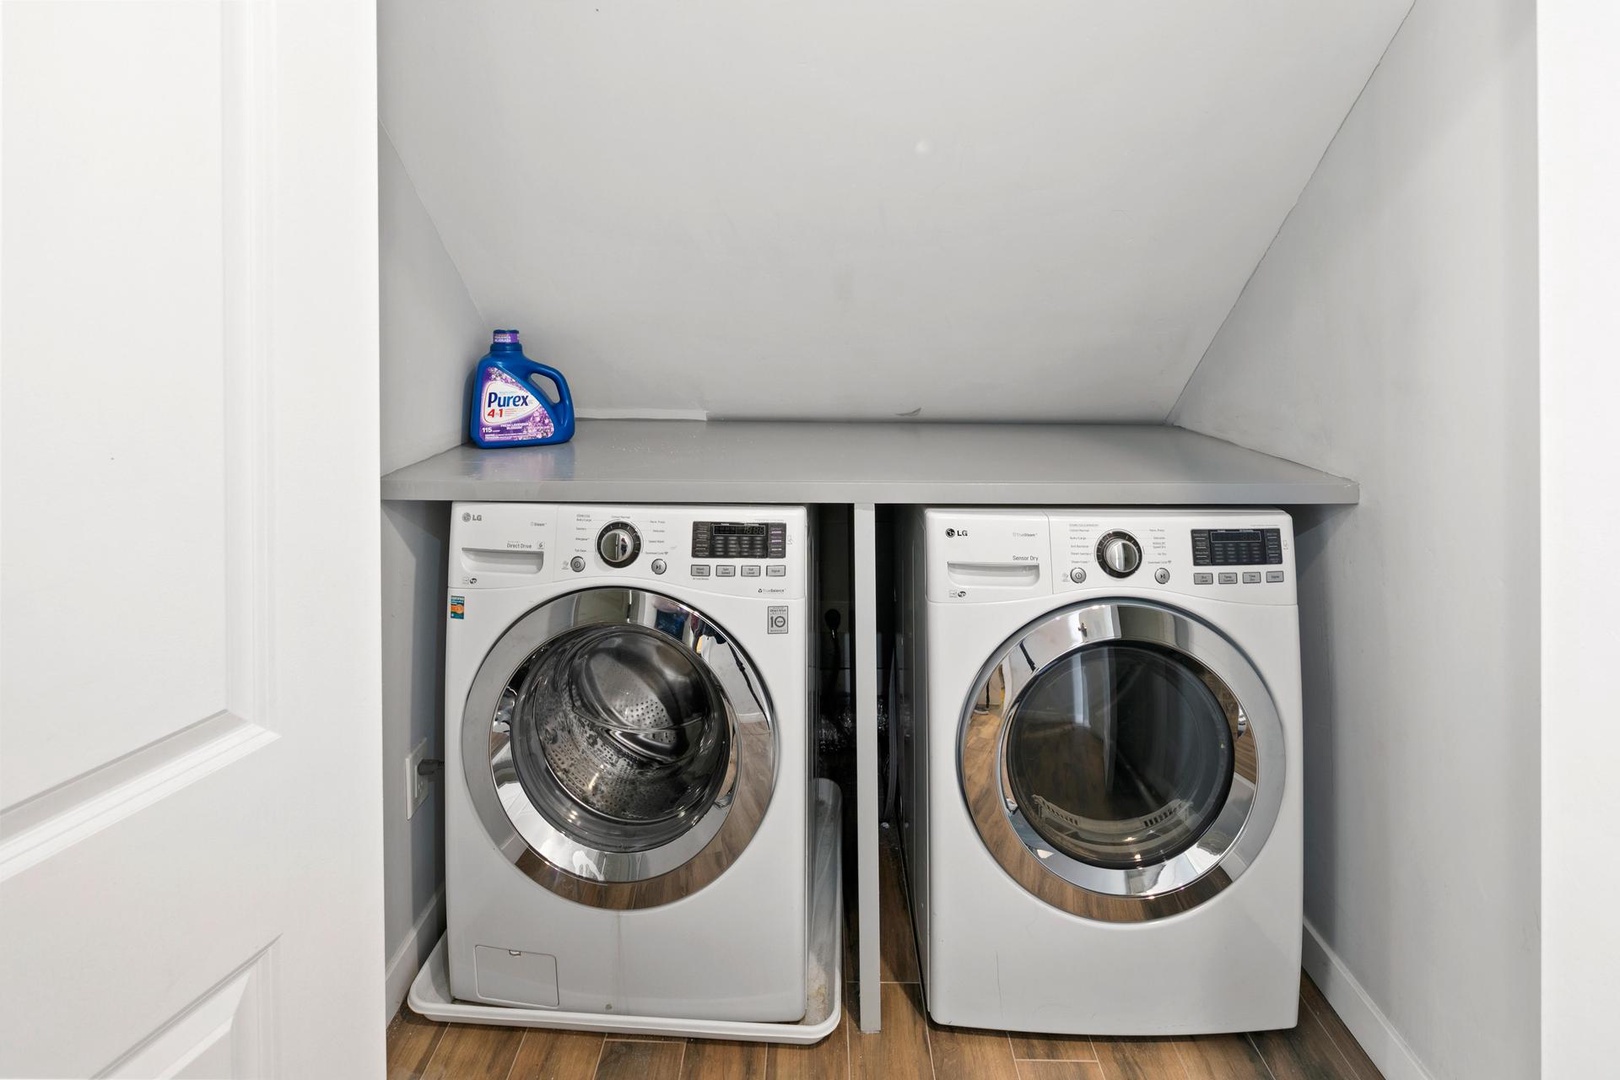 Full-size washer/dryer